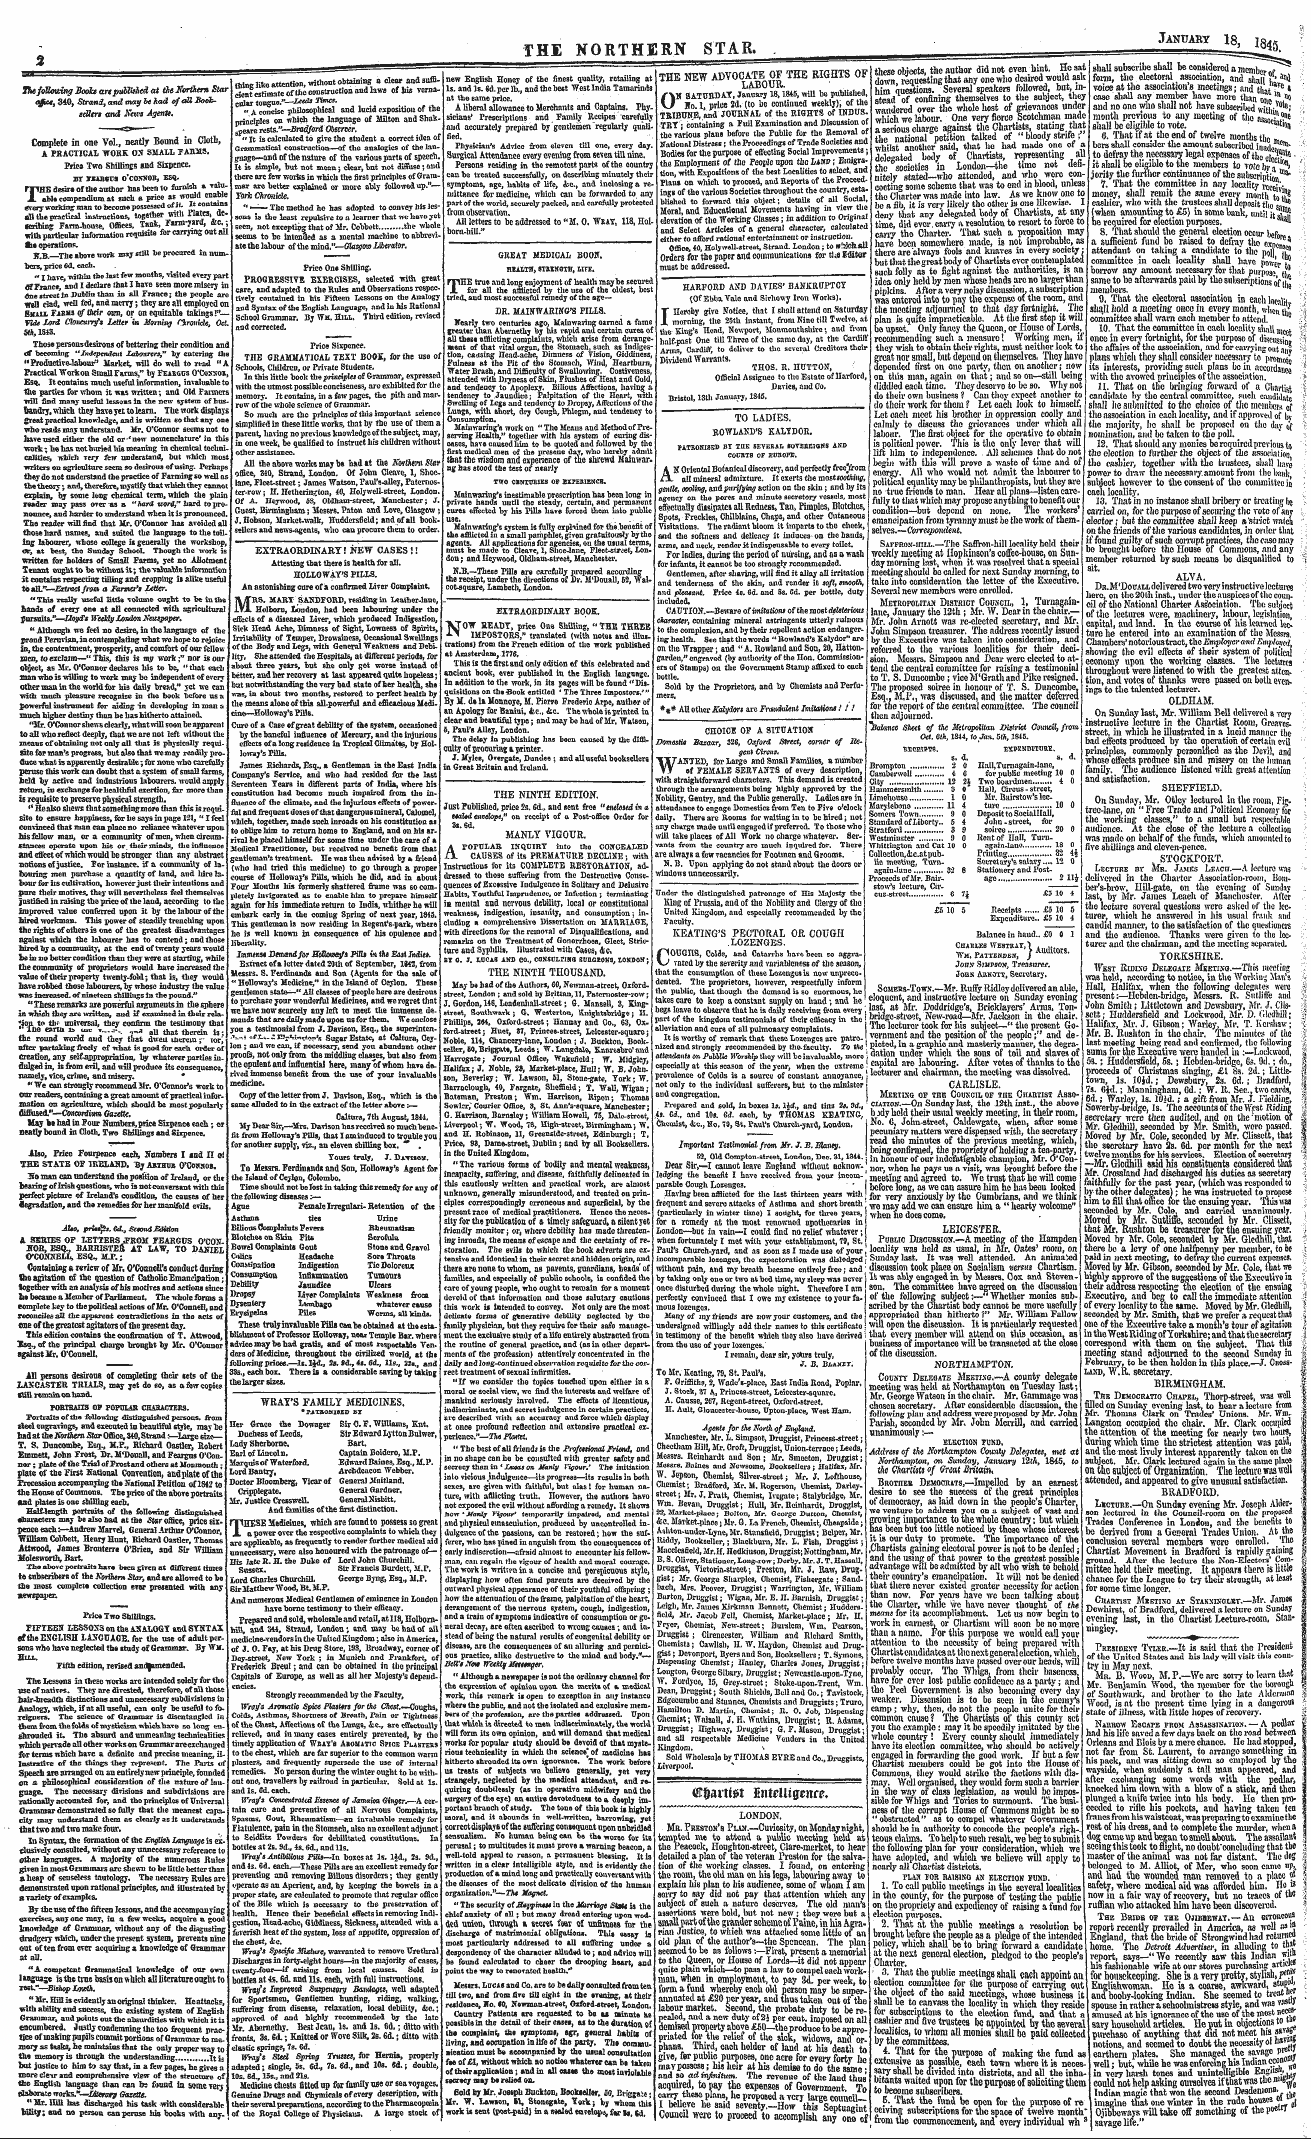 Northern Star (1837-1852): jS F Y, 4th edition - Ad00222